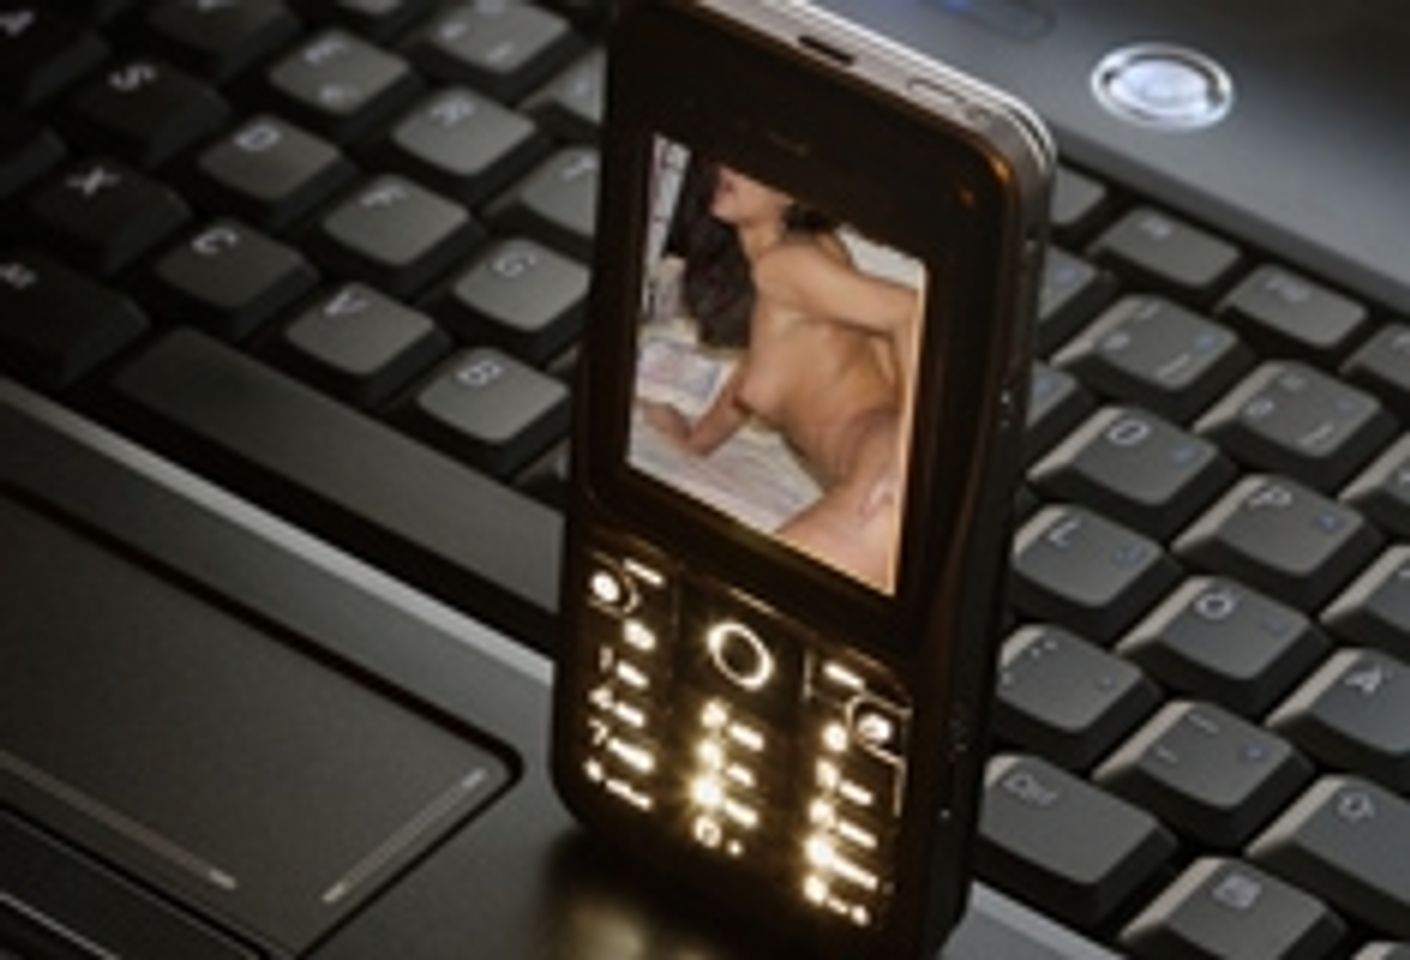 Reuters: Mobile Is ‘Next Frontier for Erotica’